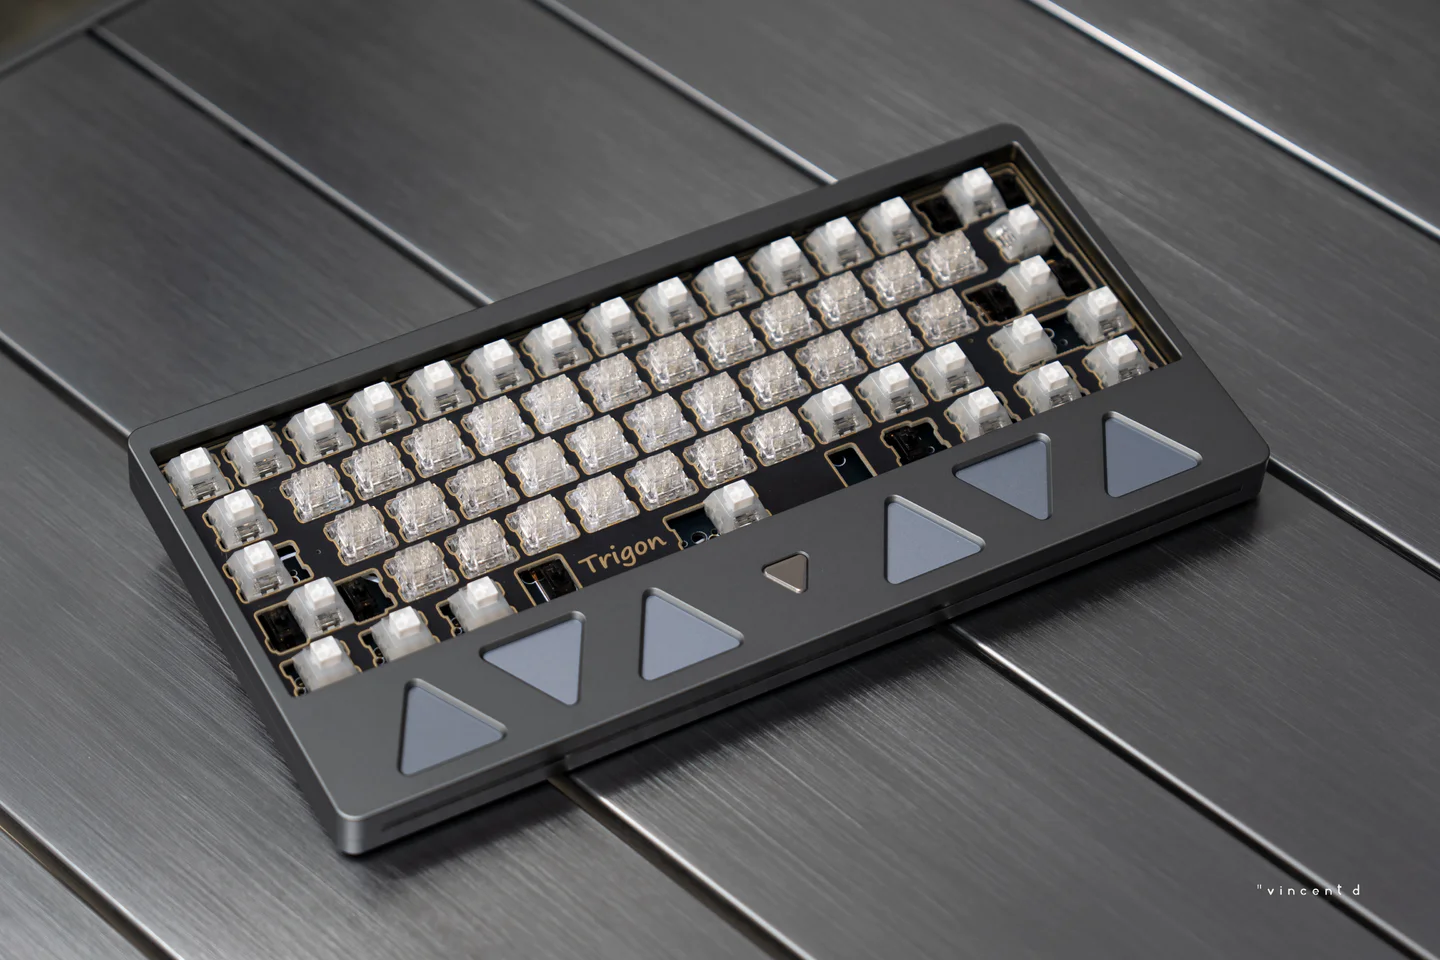 [Group-Buy] NotfromSam Trigon Anodized Edition Keyboard Kit